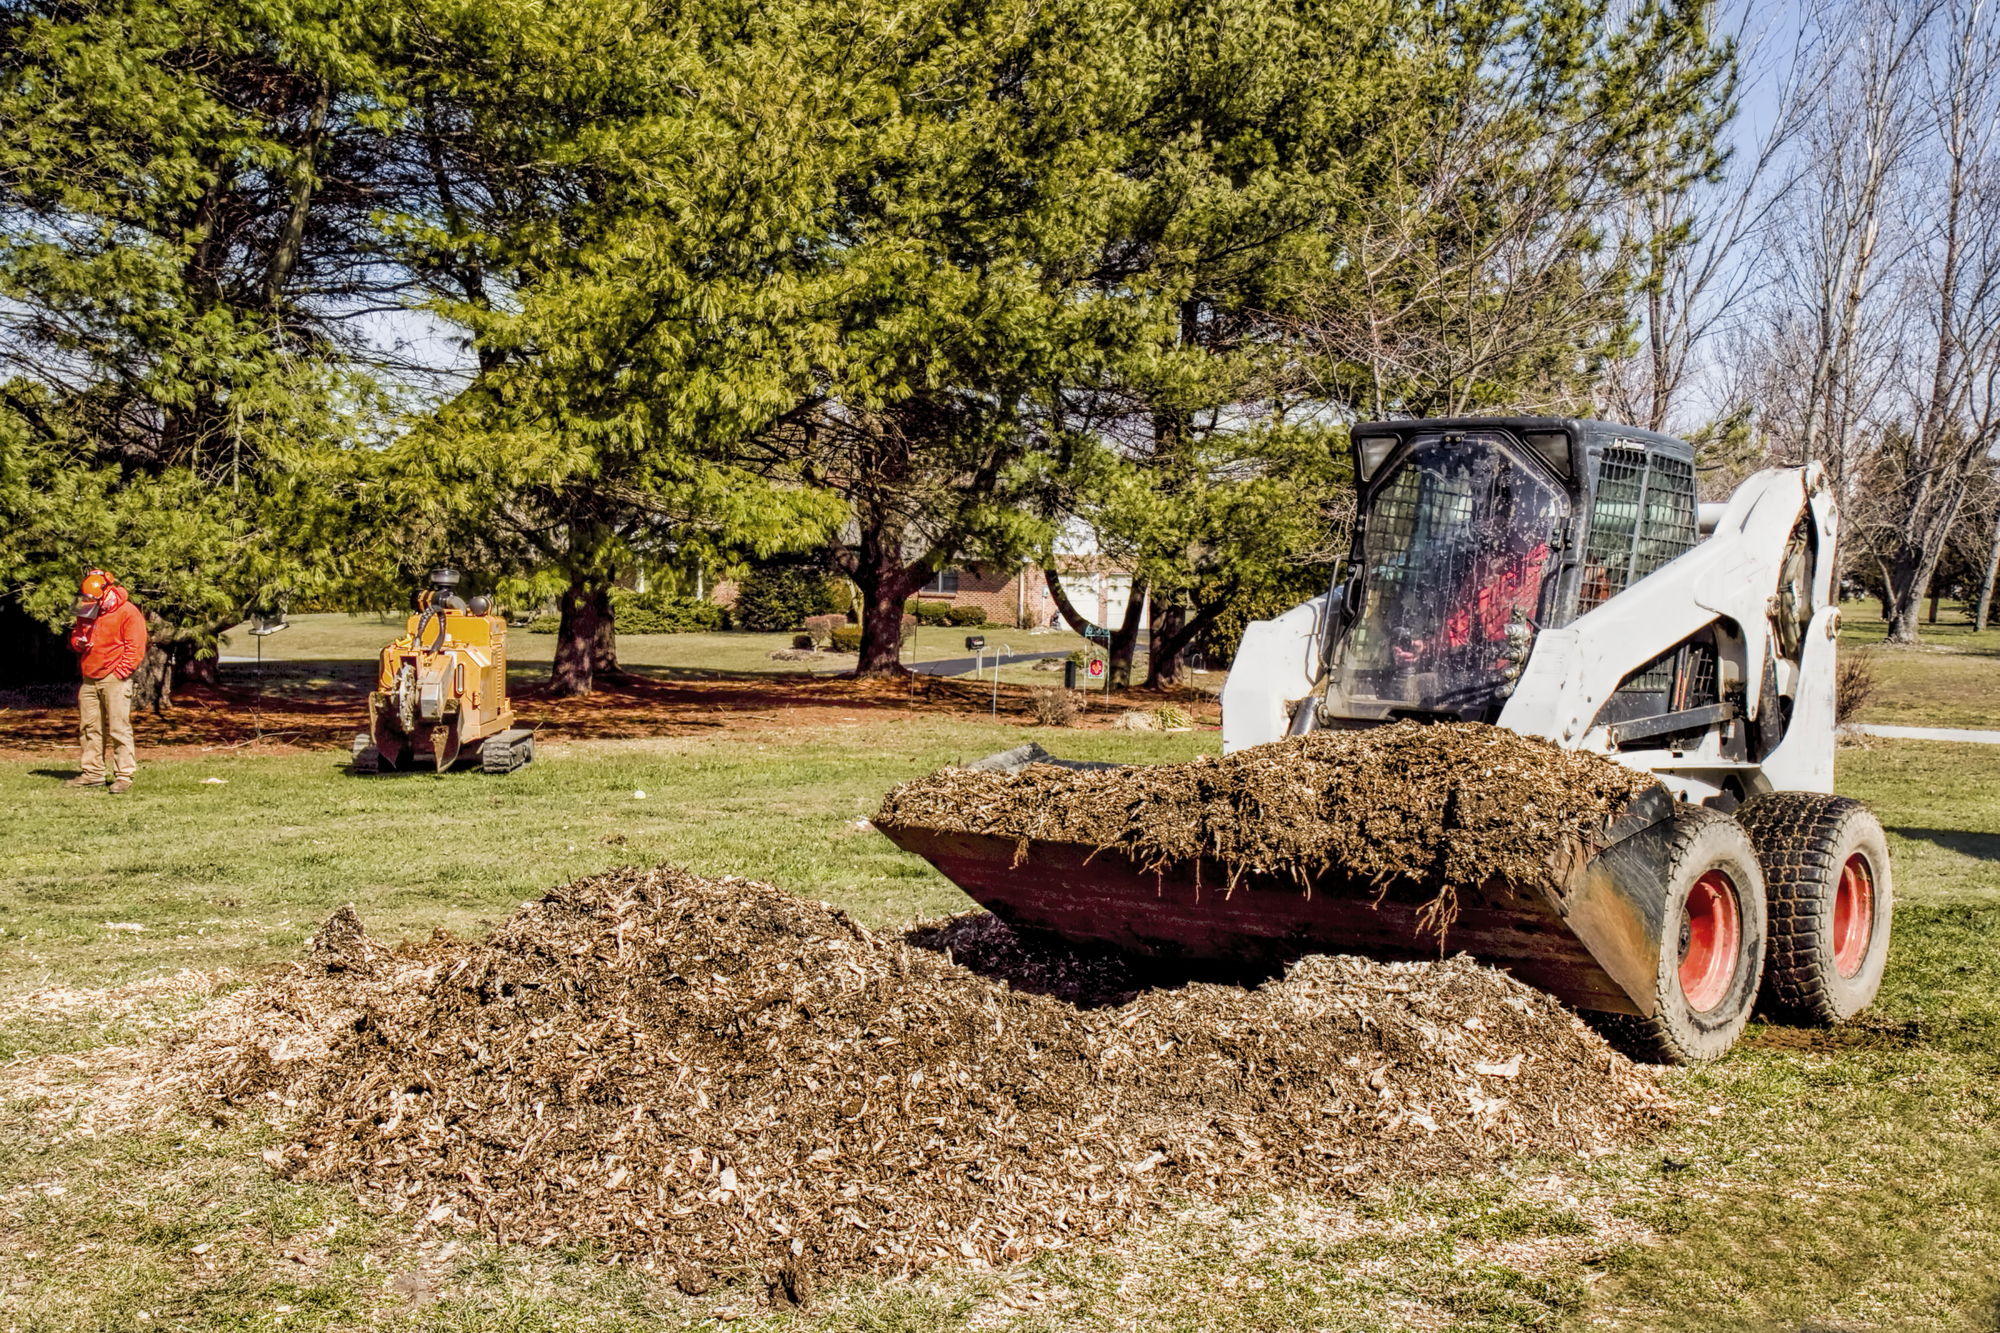 Prodan LLC provides Wood Village land clearing services